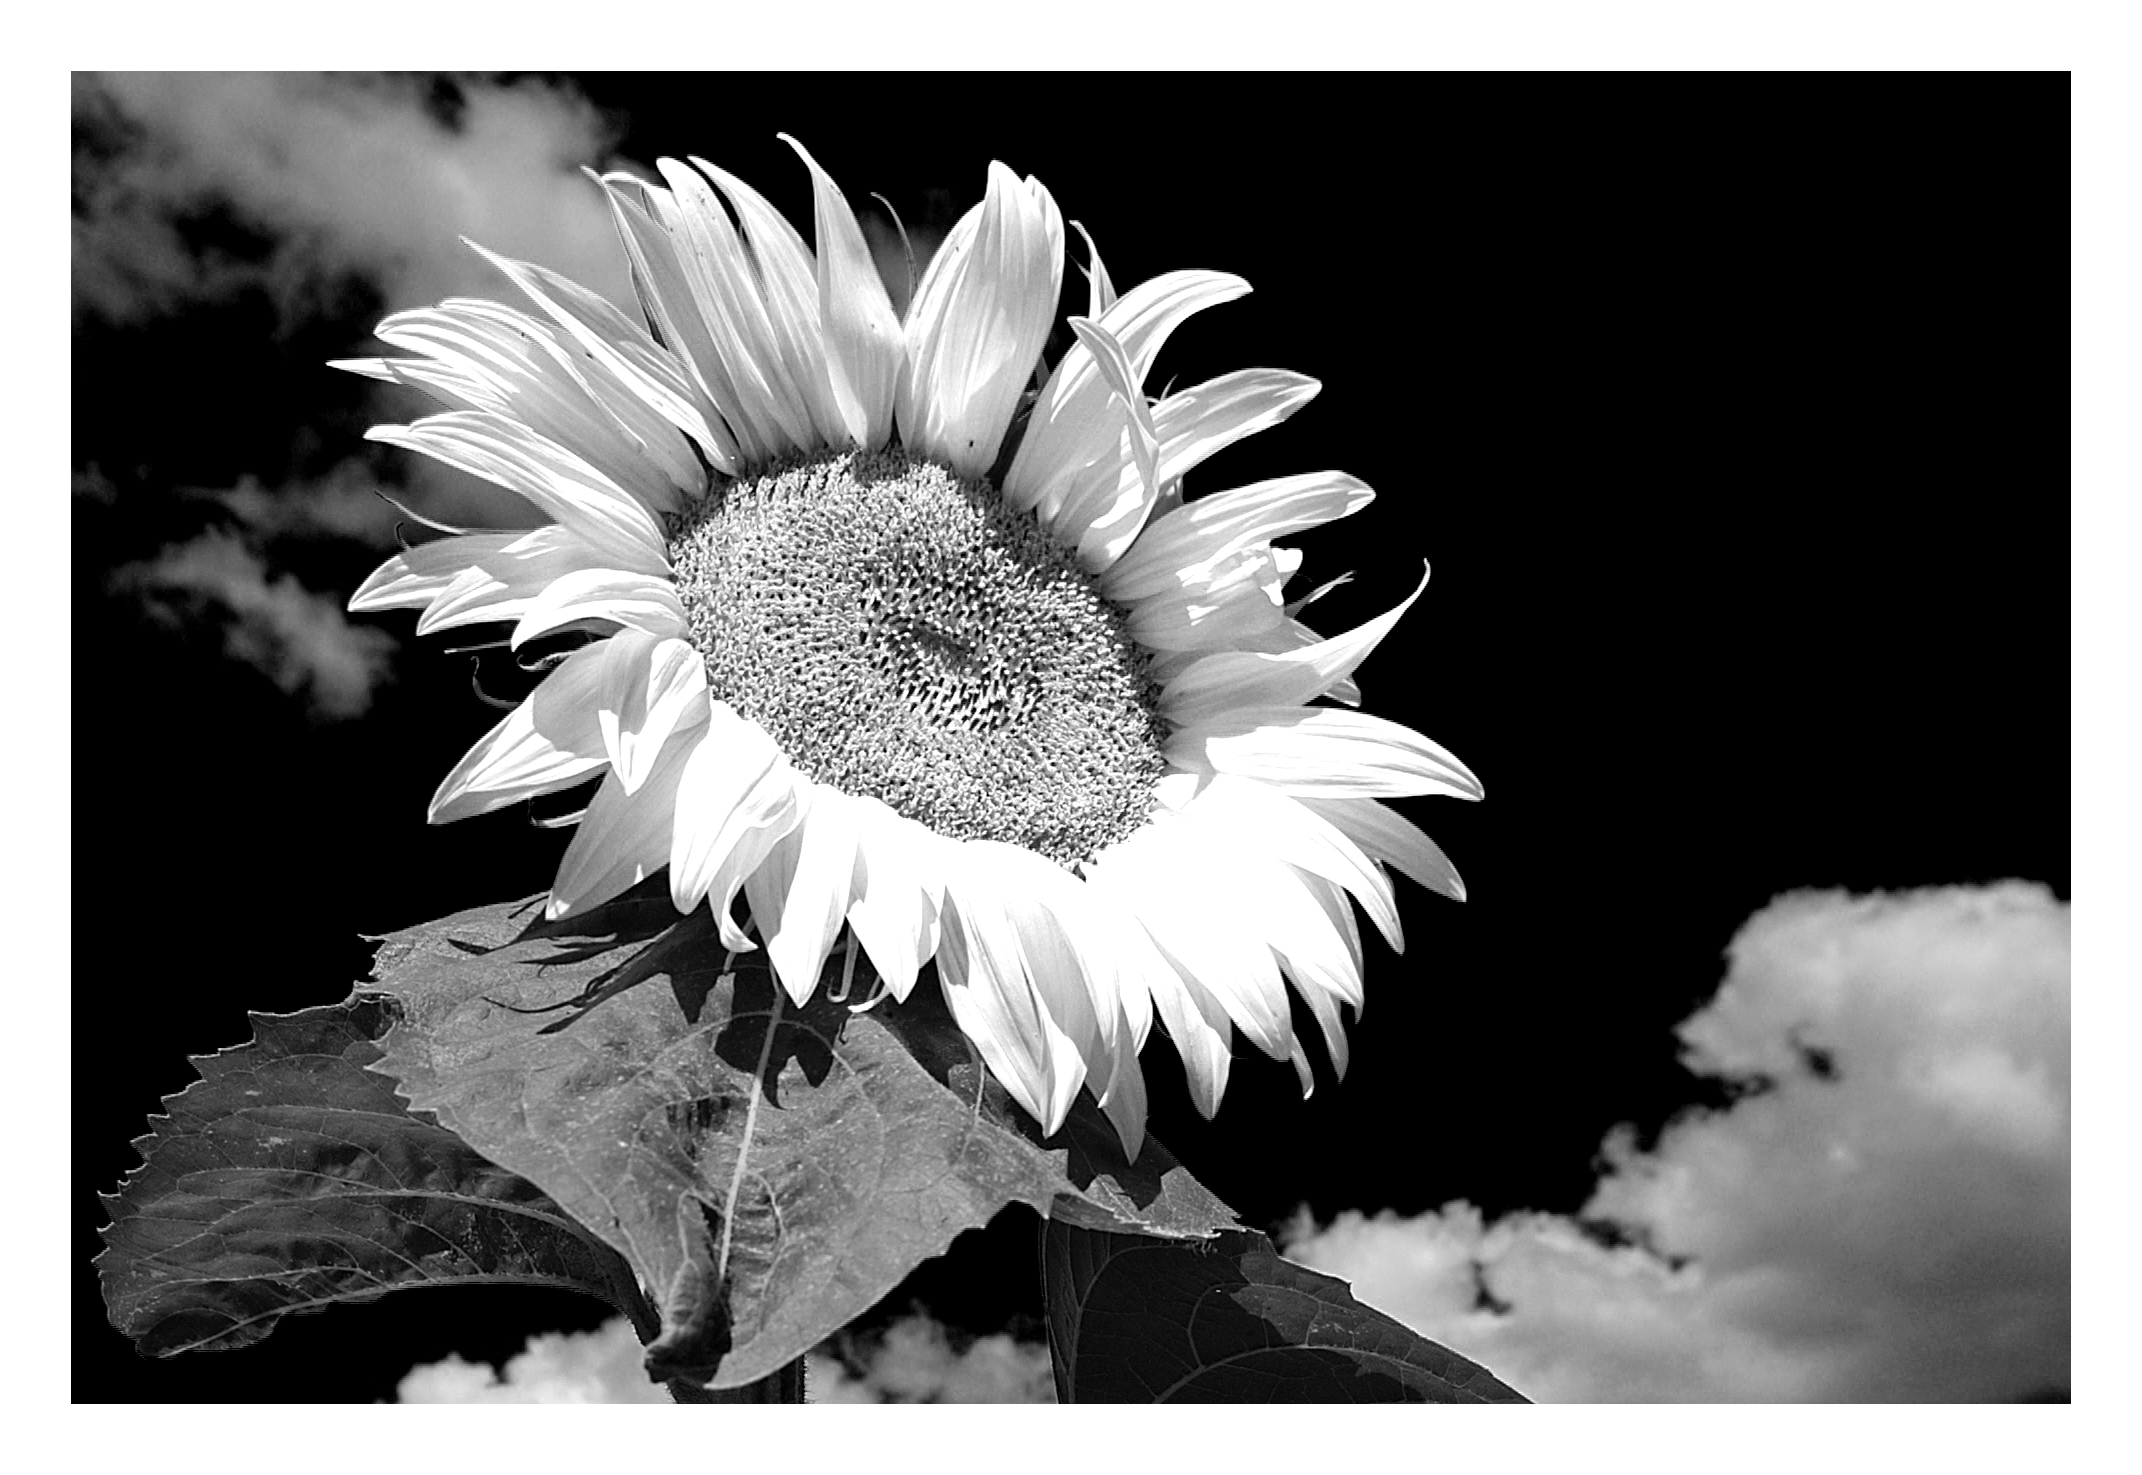 Sunflower (15450208703)